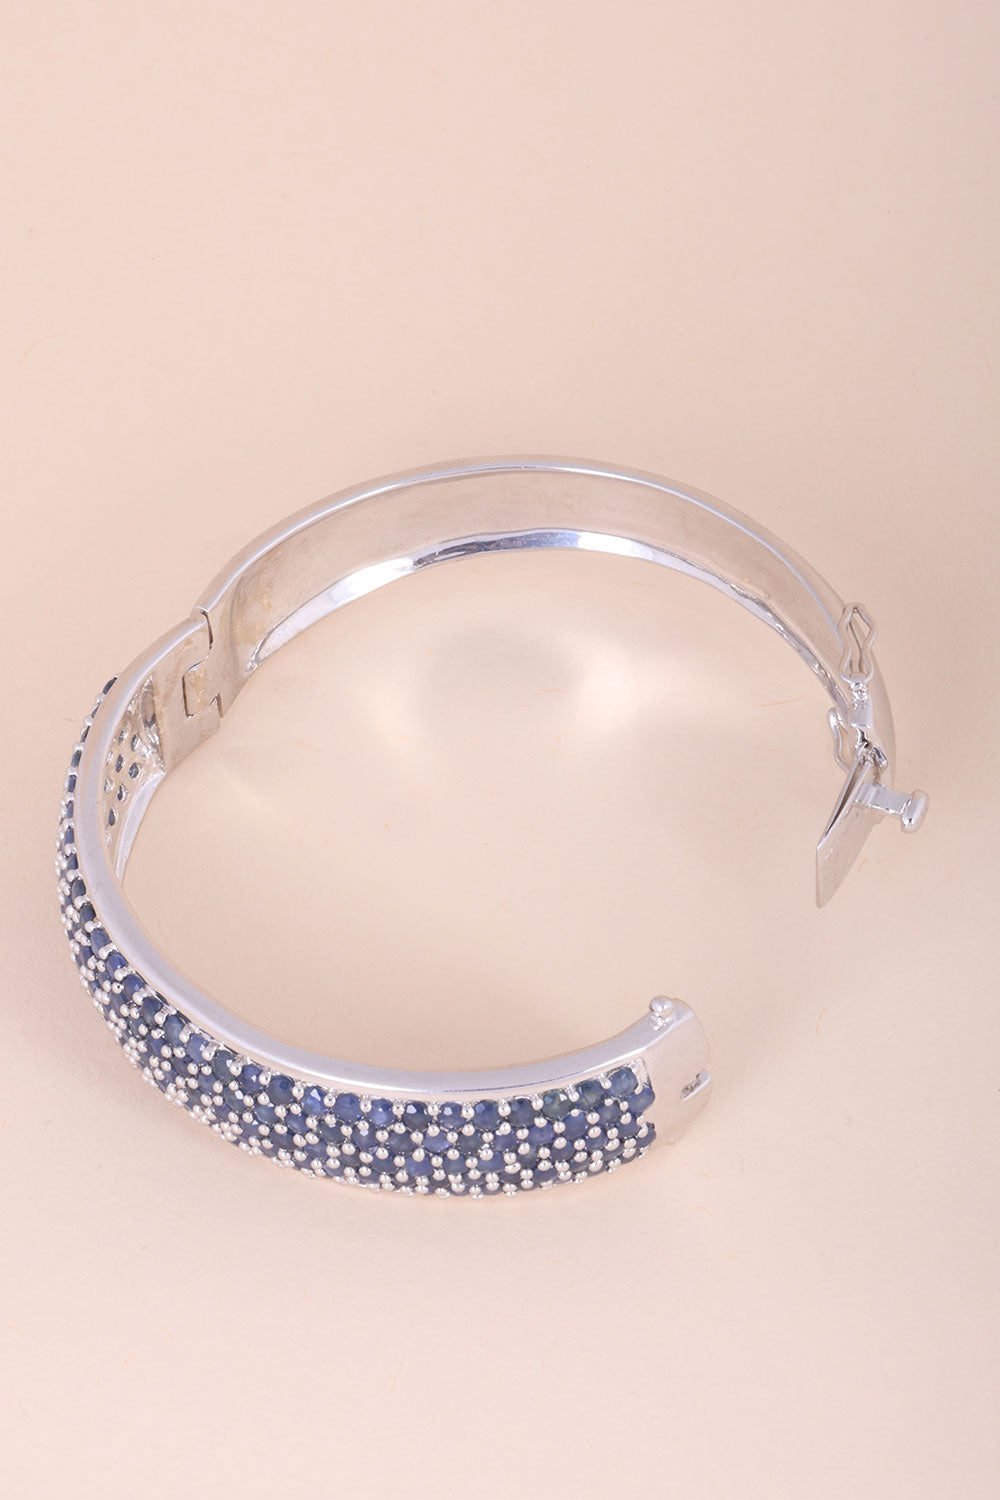 Blue Sapphire Sterling Silver Bangle - Avishya